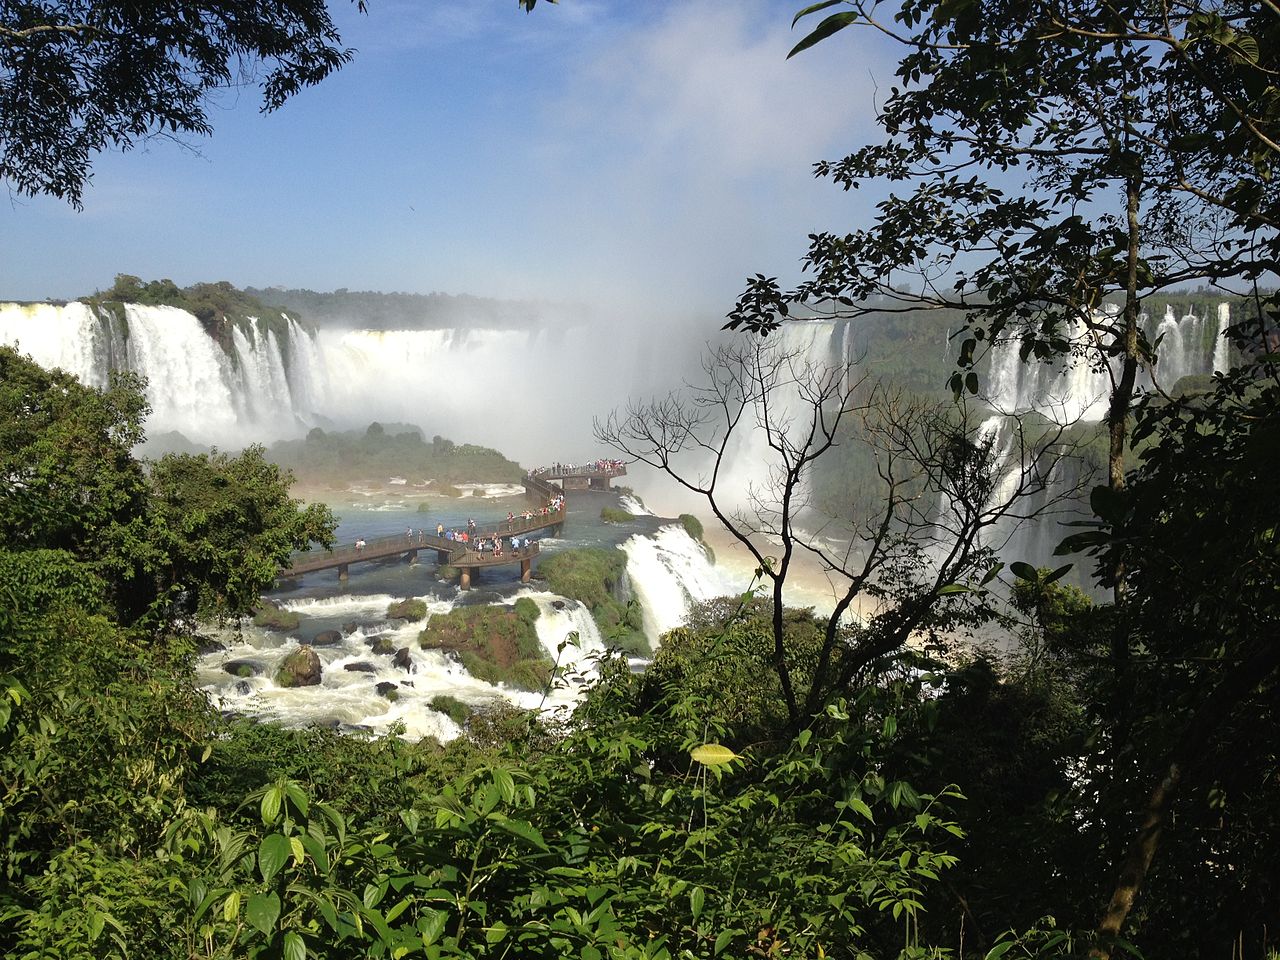 Image: https://en.wikipedia.org/wiki/Iguazu_Falls#/media/File:Cataratas_do_Igua%C3%A7u_.jpg